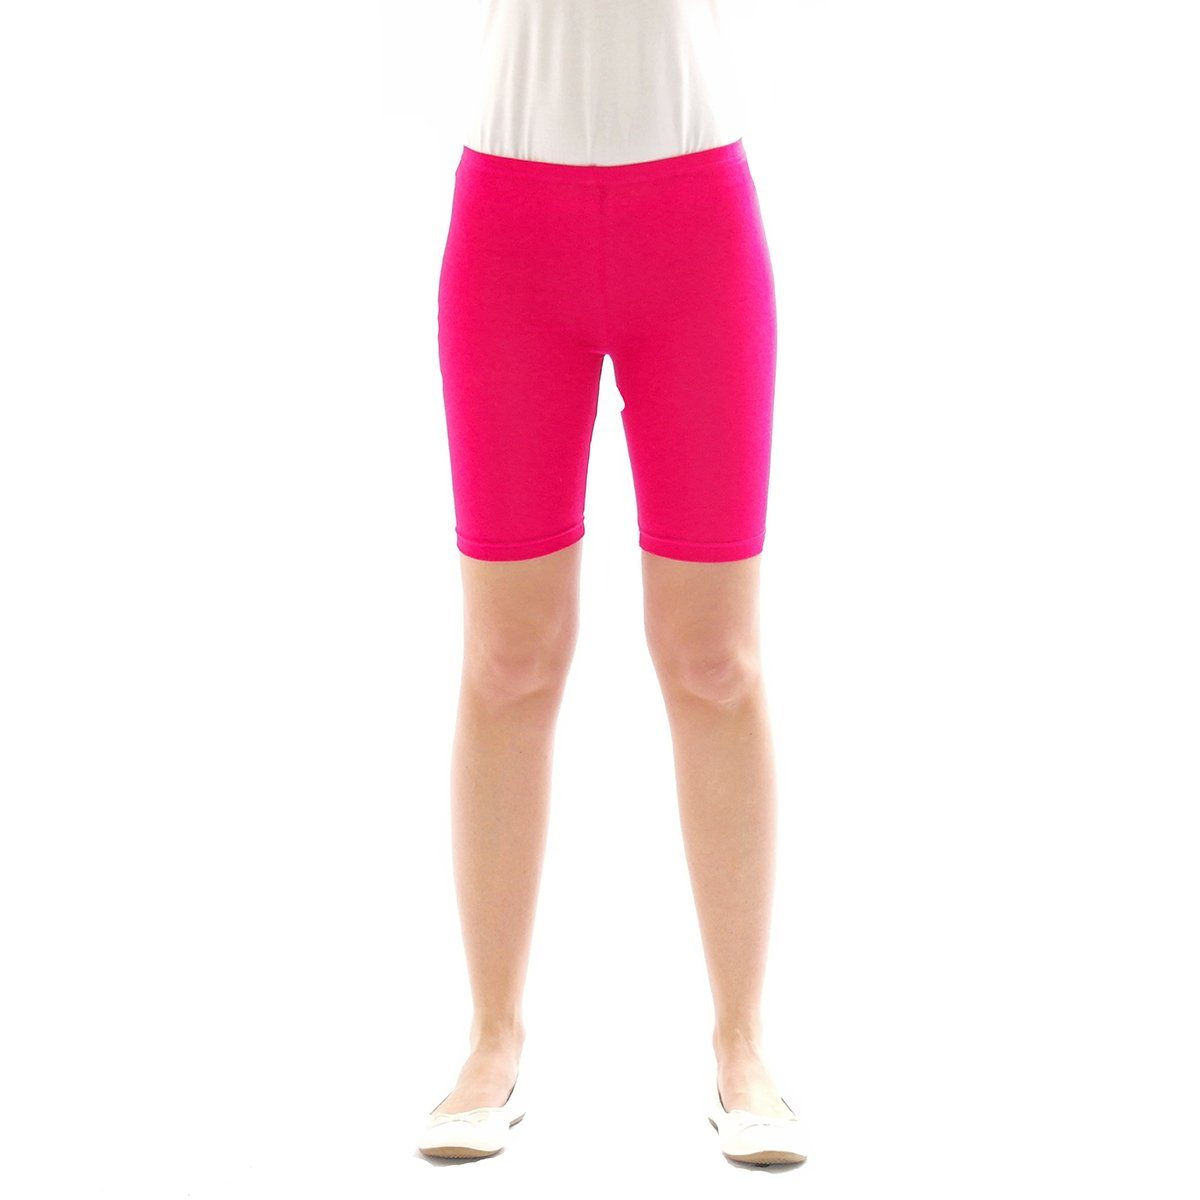 SYS Shorts Kinder Shorts Sport Pants 1/2 Baumwolle Jungen Mädchen pink